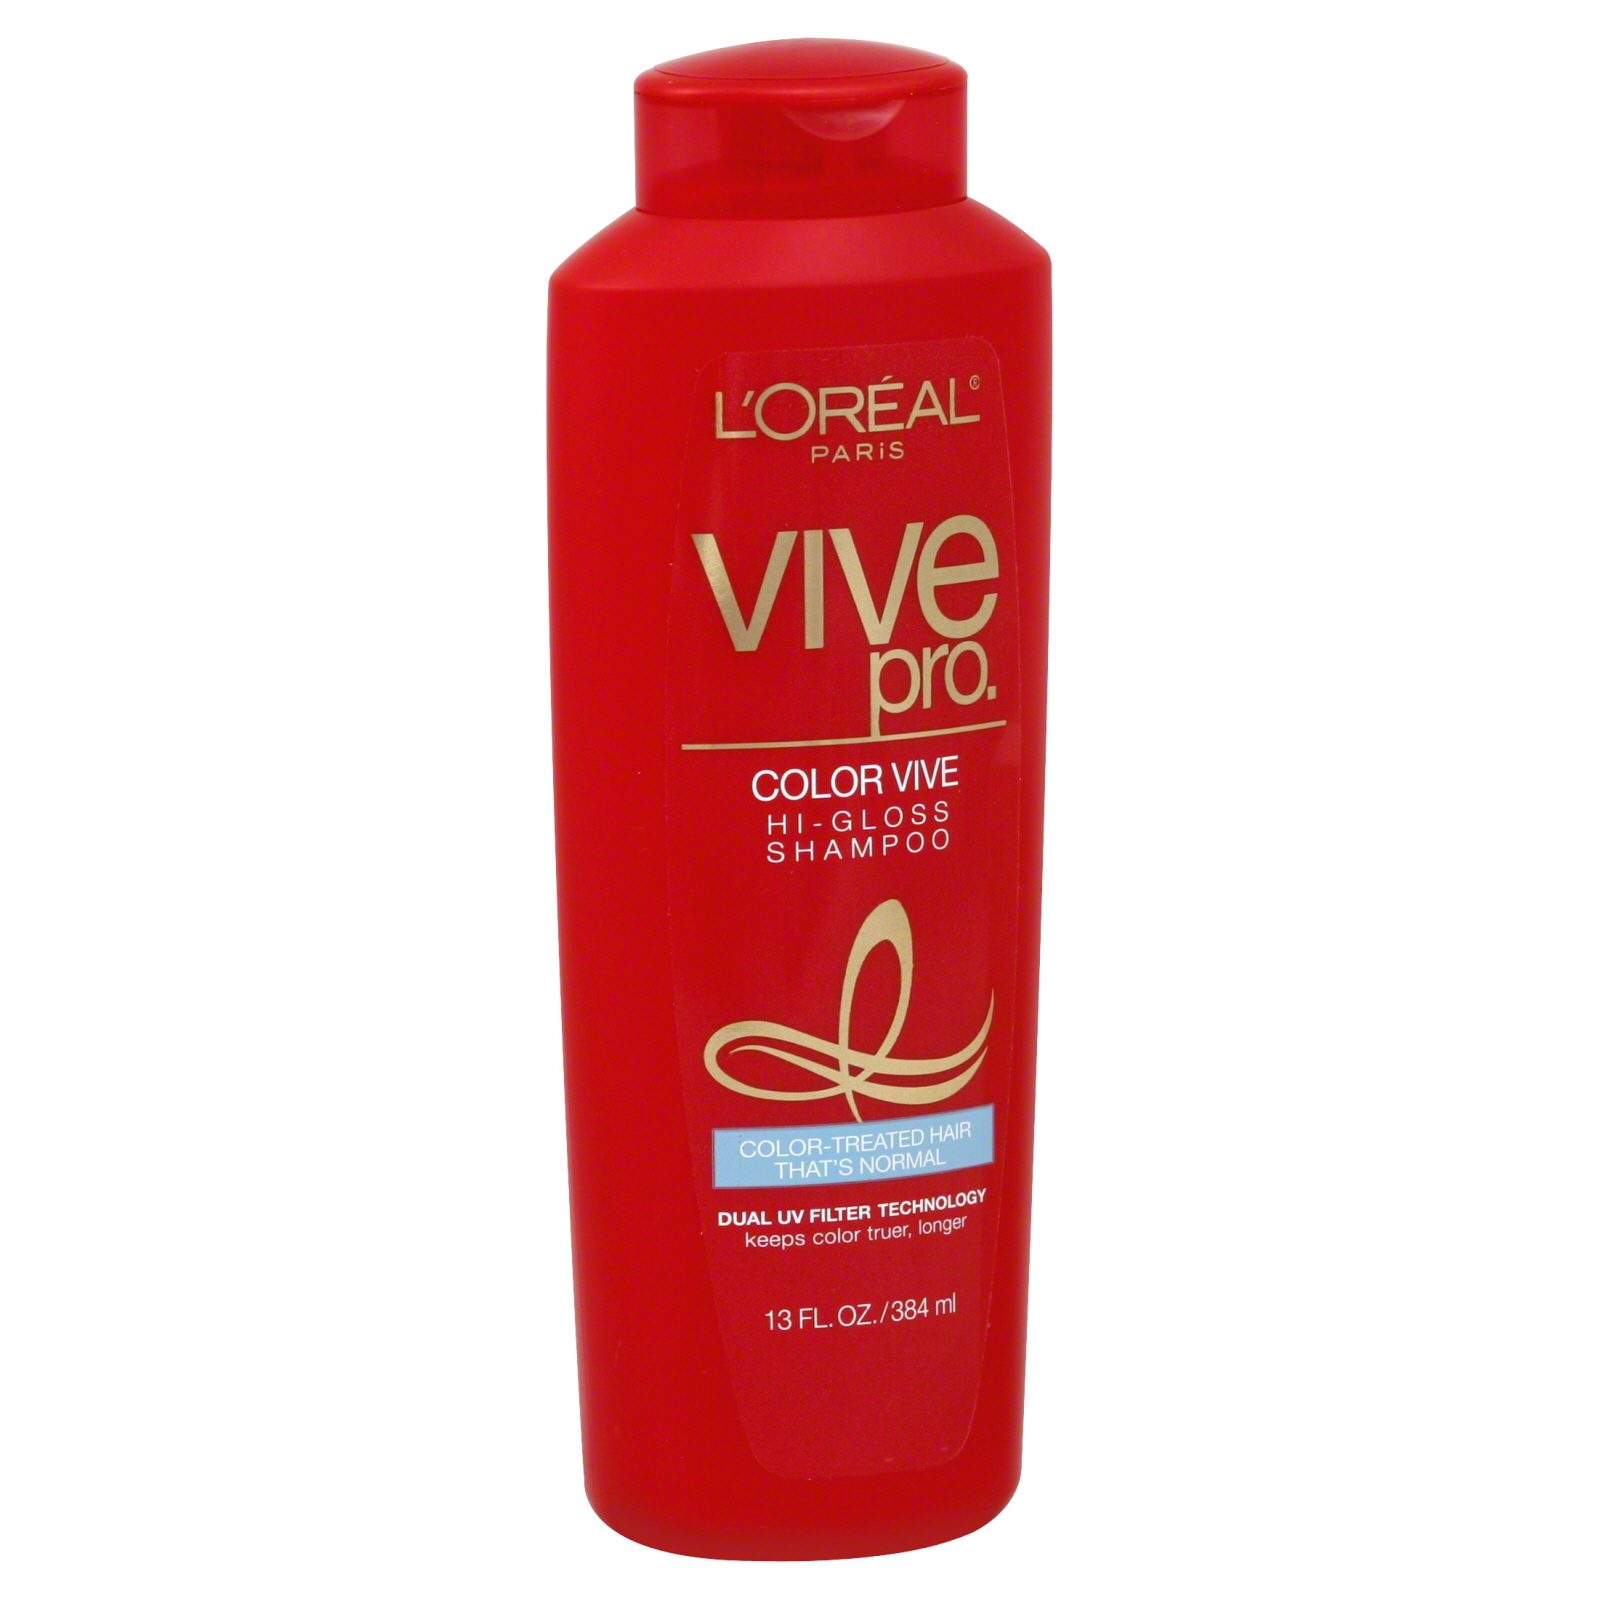 L'Oreal Vive Pro Color Vive Shampoo, Hi-Gloss, 13 fl oz (384 ml